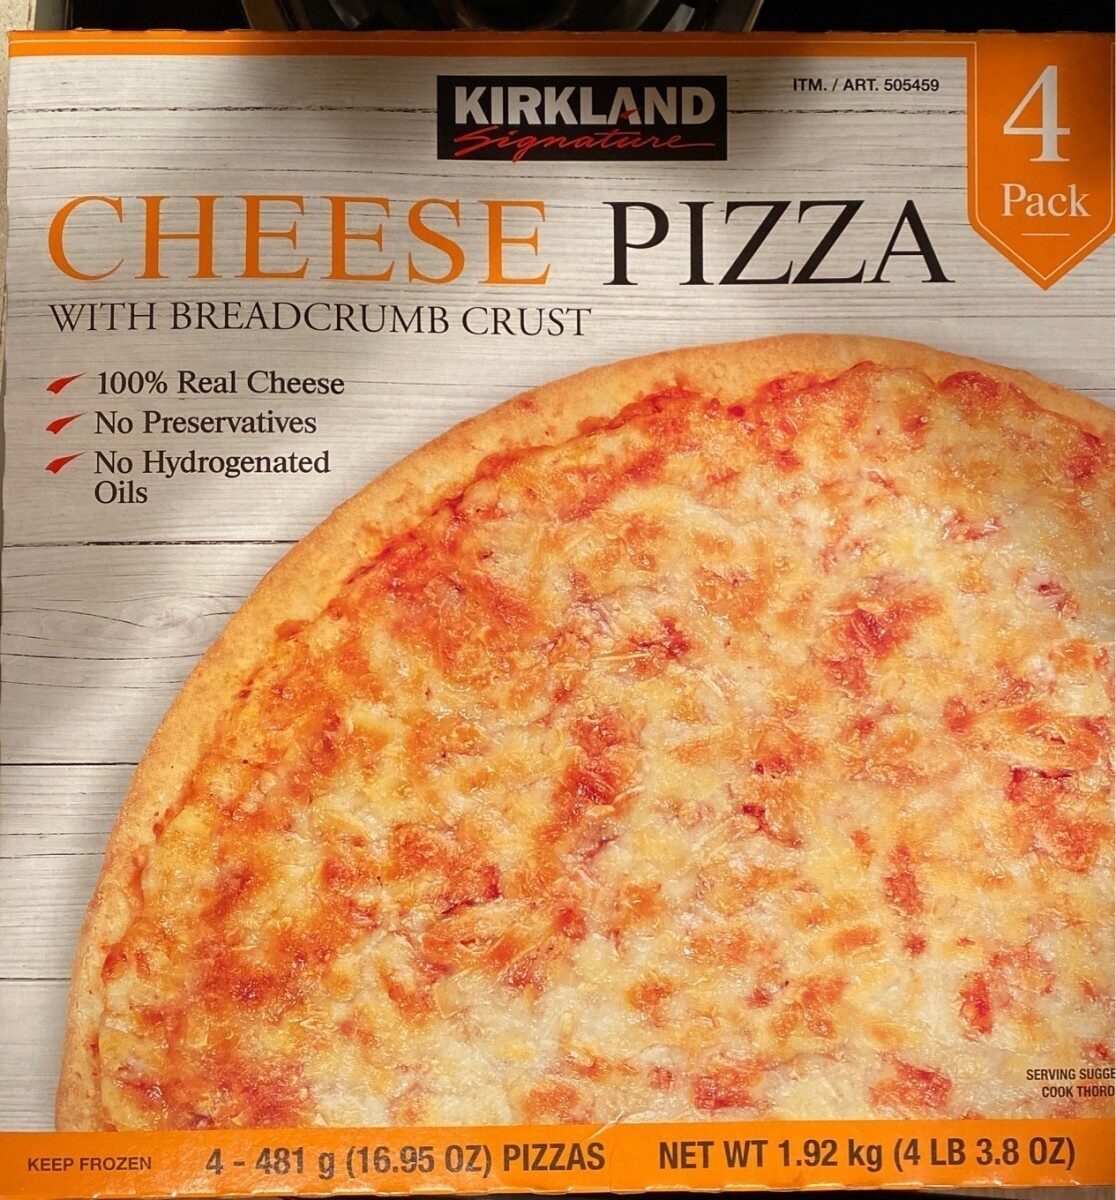 Cheese Pizza with Breadcrumb Crust - Produit - en